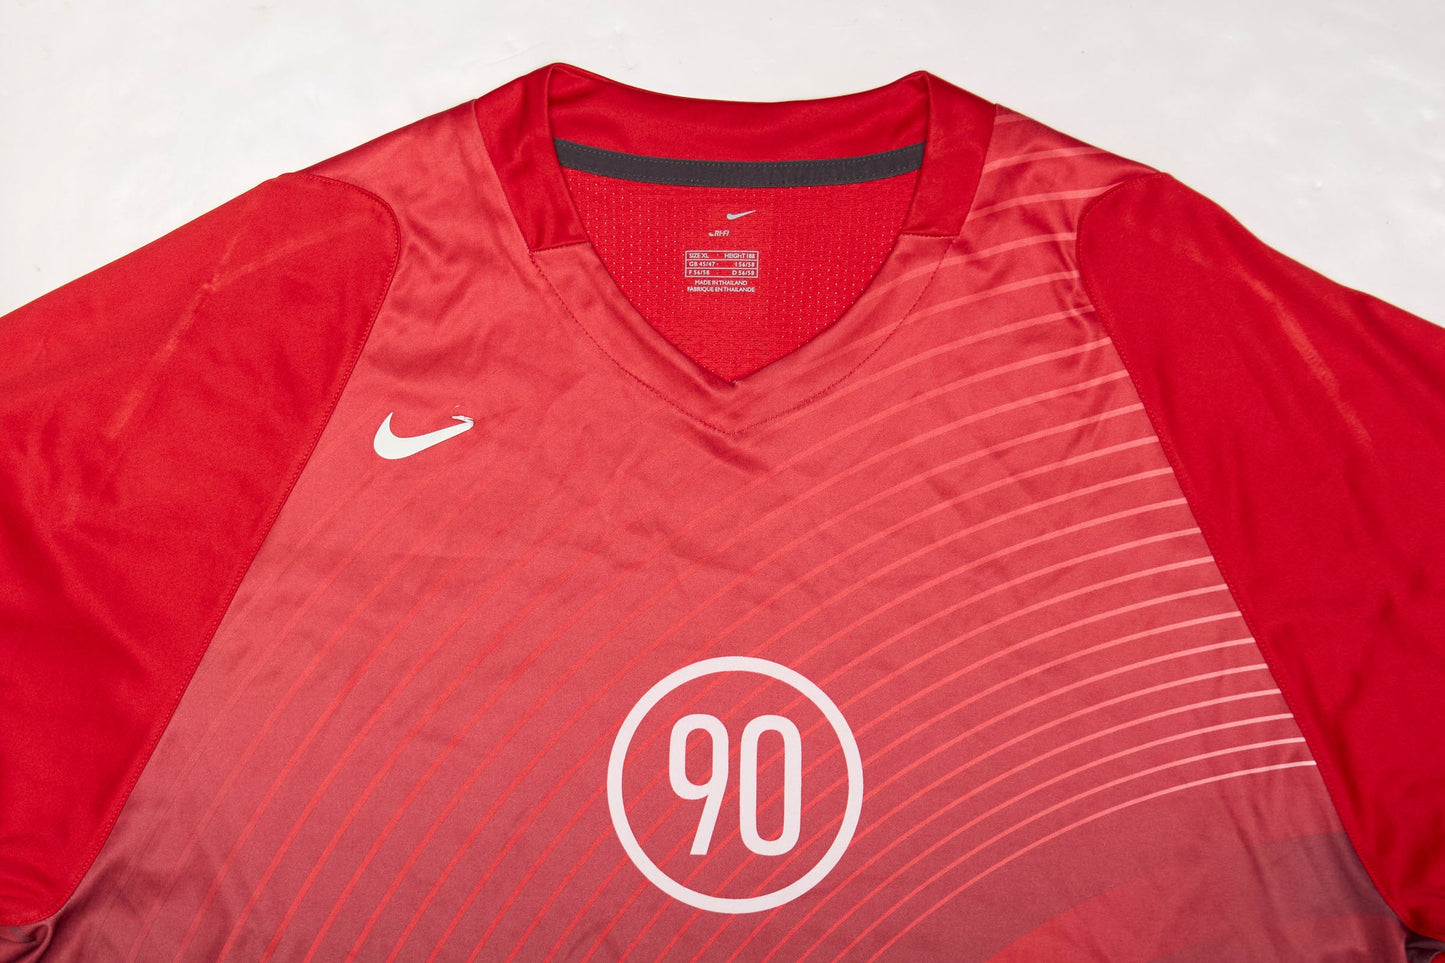 Mens Nike Football Shirt - L